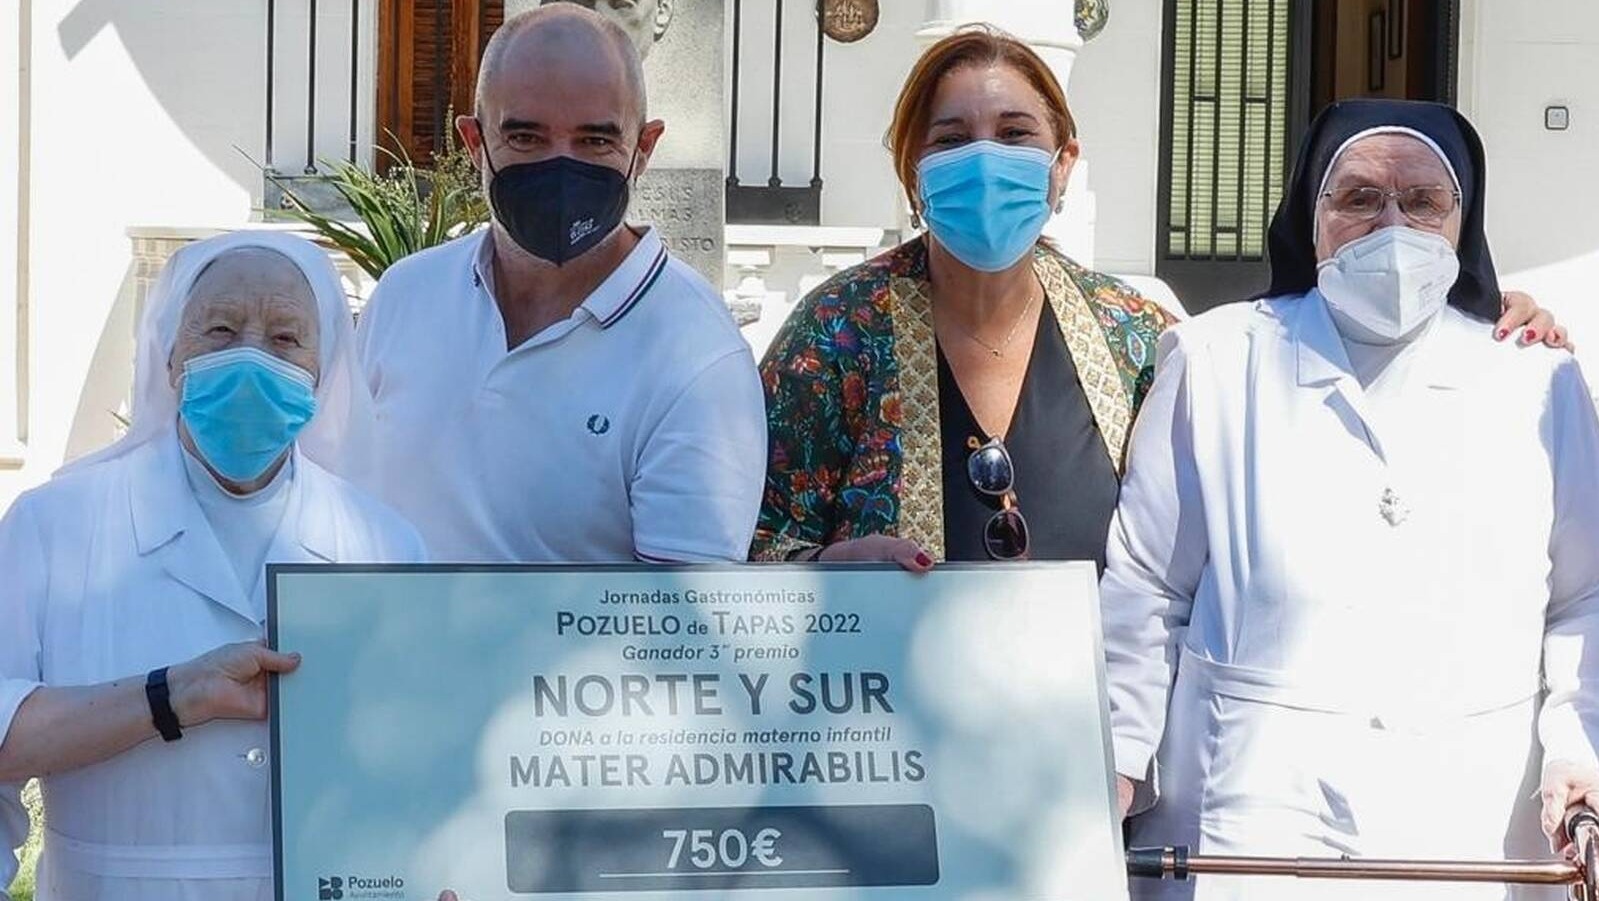 Jorge Nájera, ganador de 'Pozuelo de Tapas', dona el premio a la Residencia Las Dolorosas